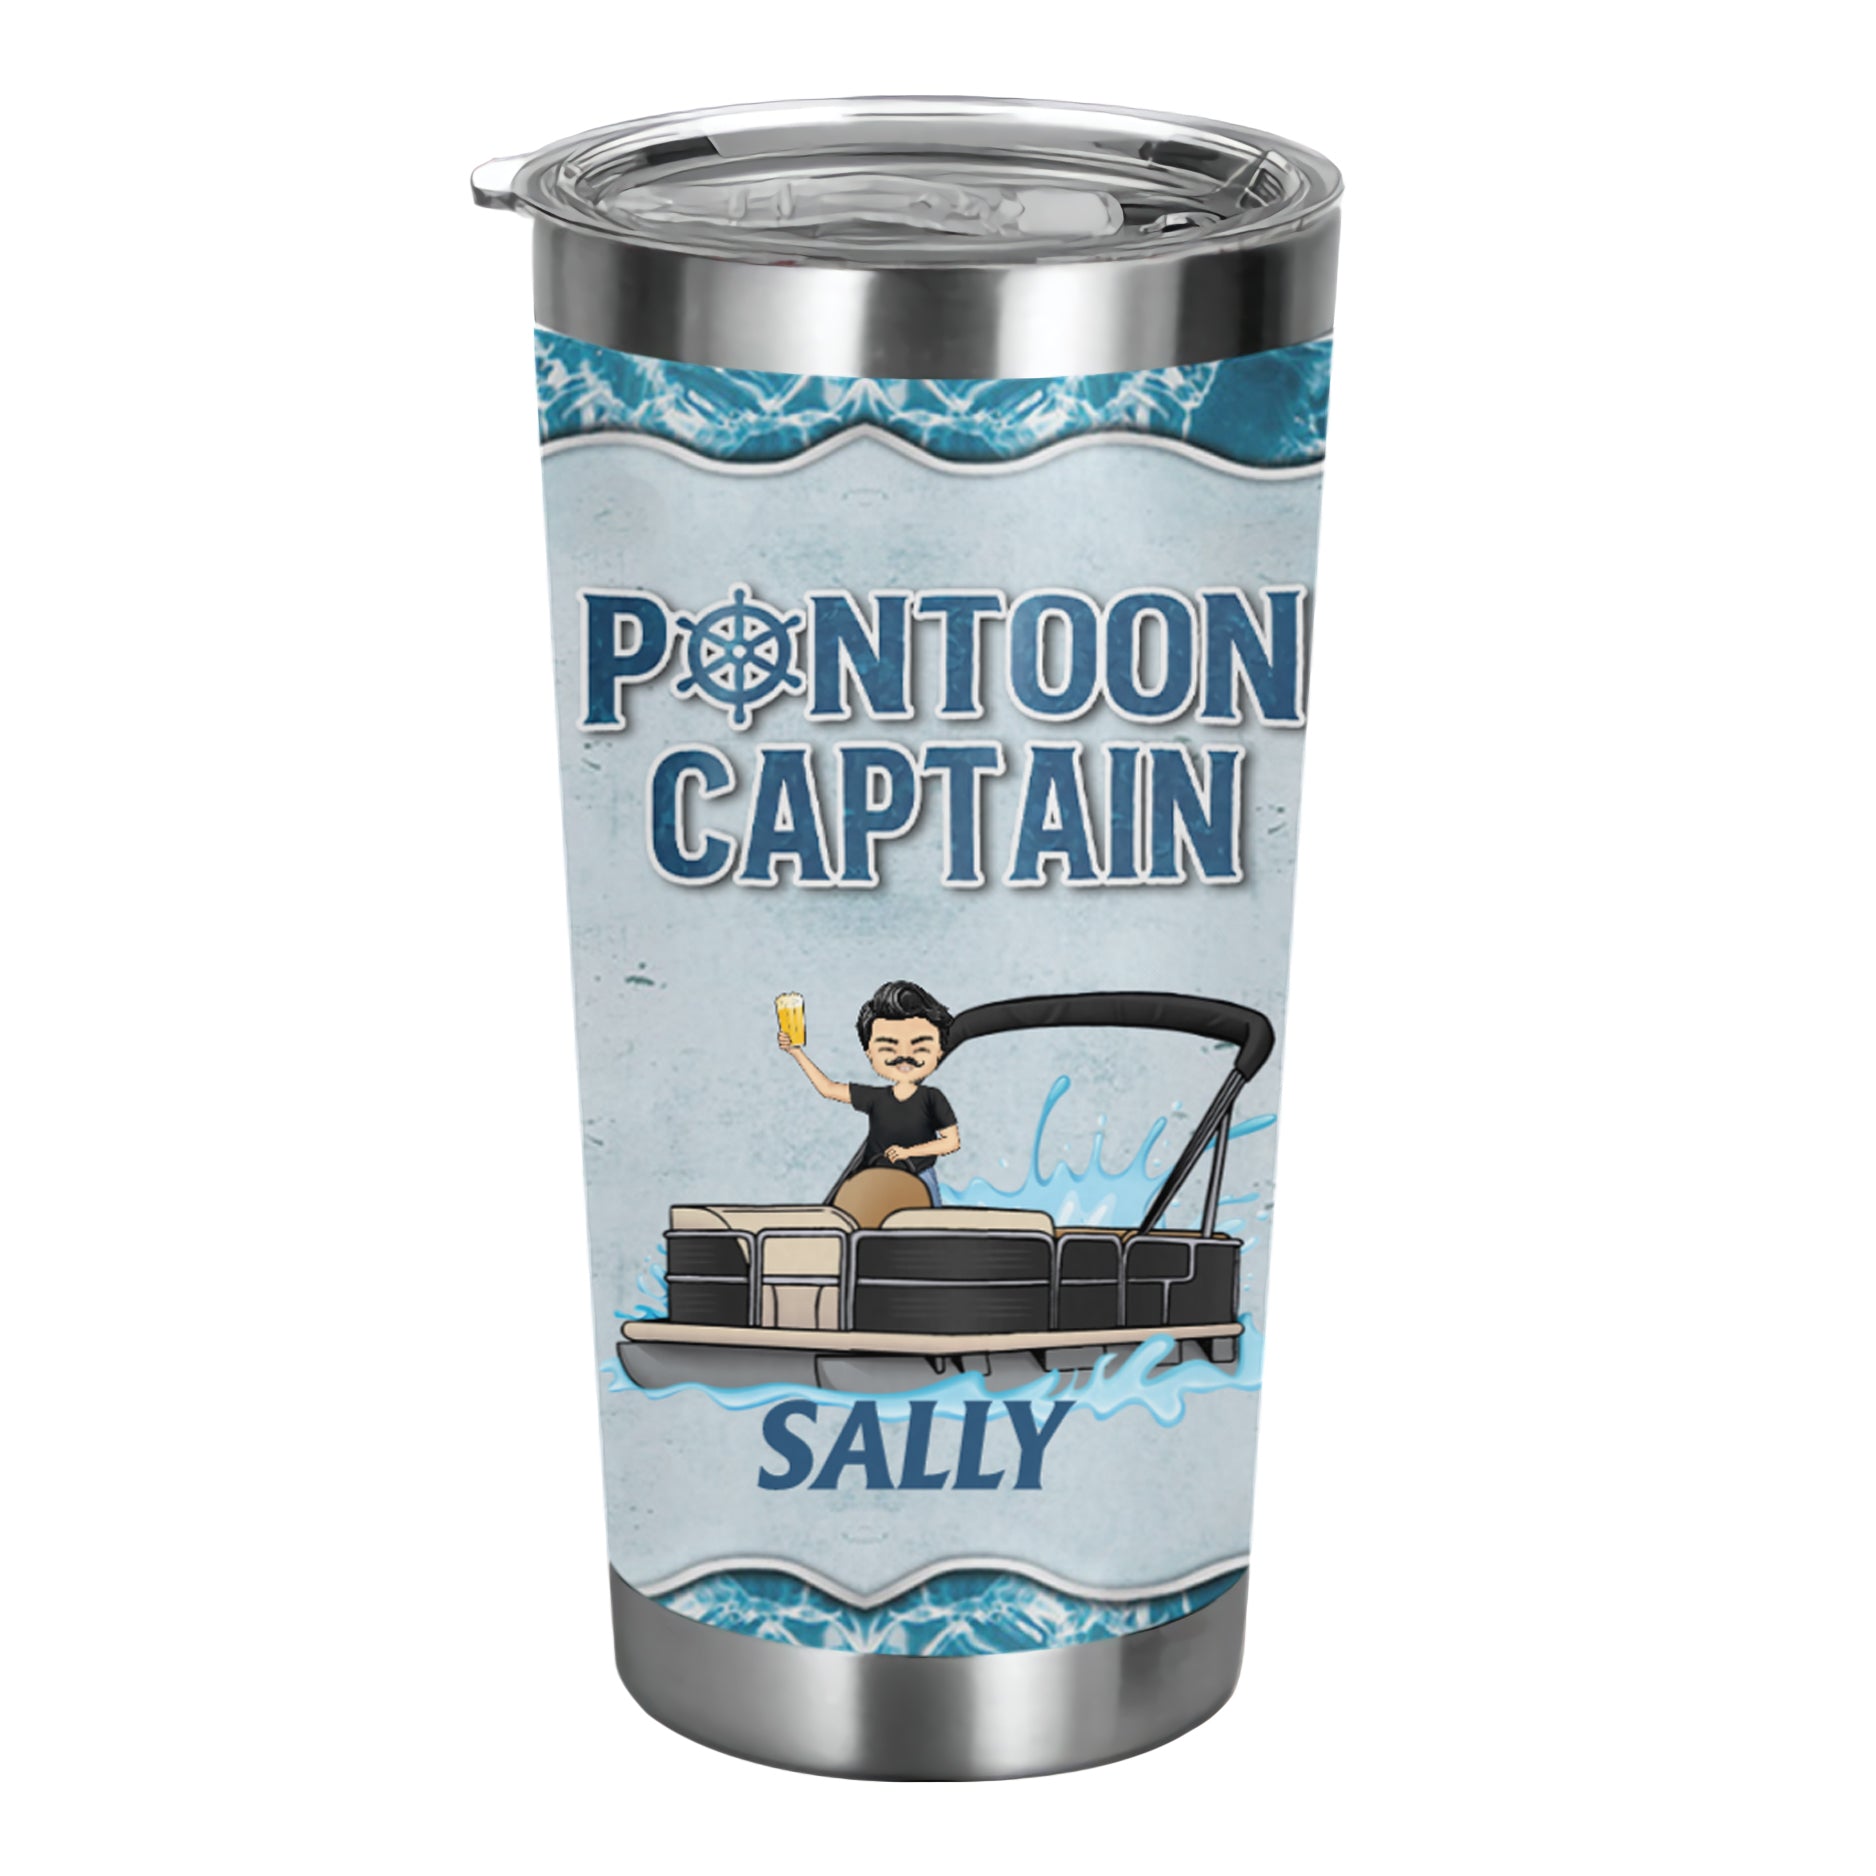 Pontoon Captain Like A Regular Captain Only More Drunker - Personalized Custom Tumbler